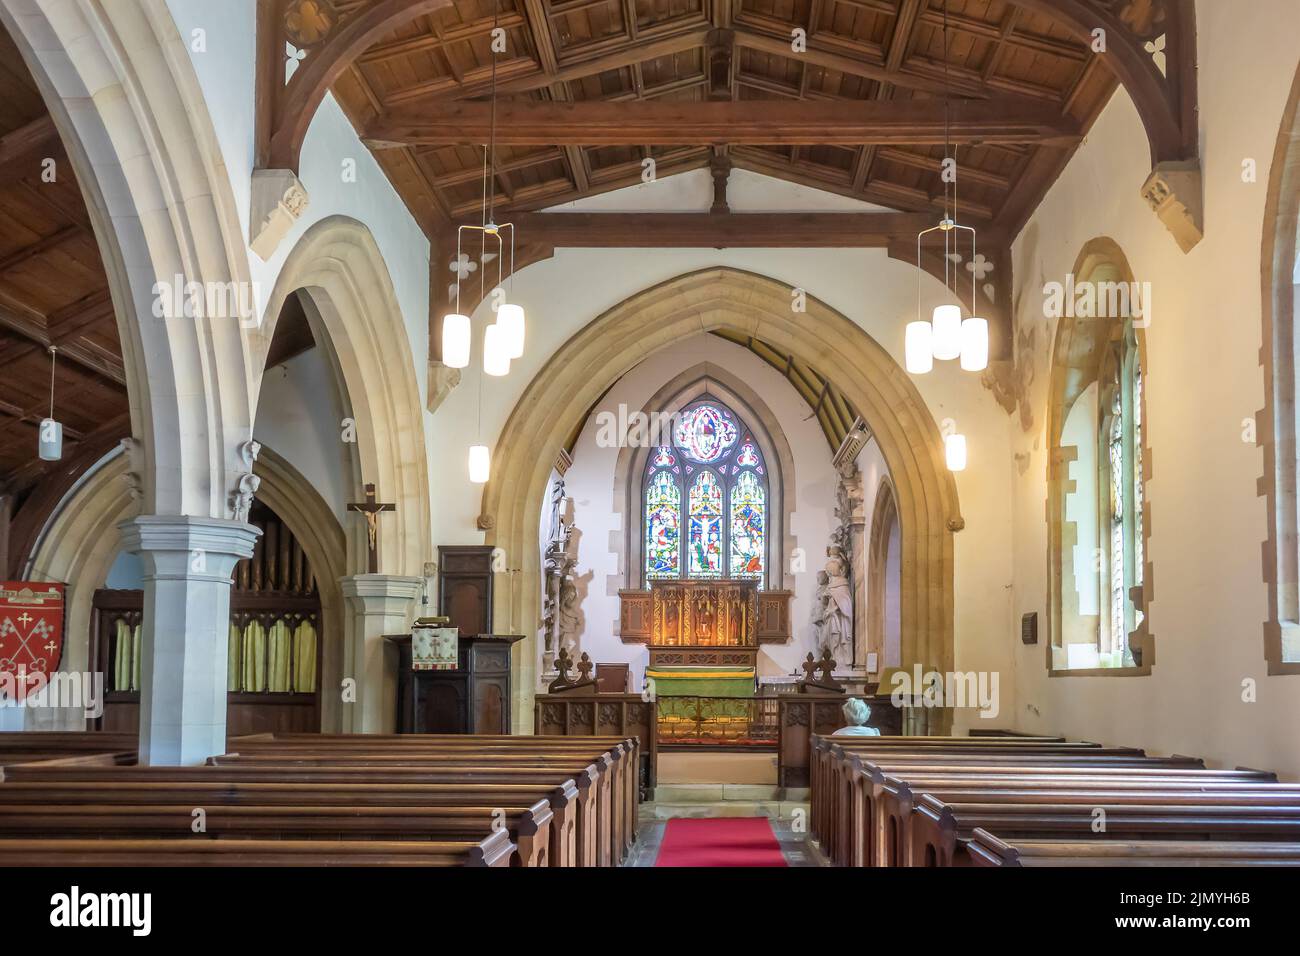 England, Northamptonshire, Rockingham church interior Stock Photo